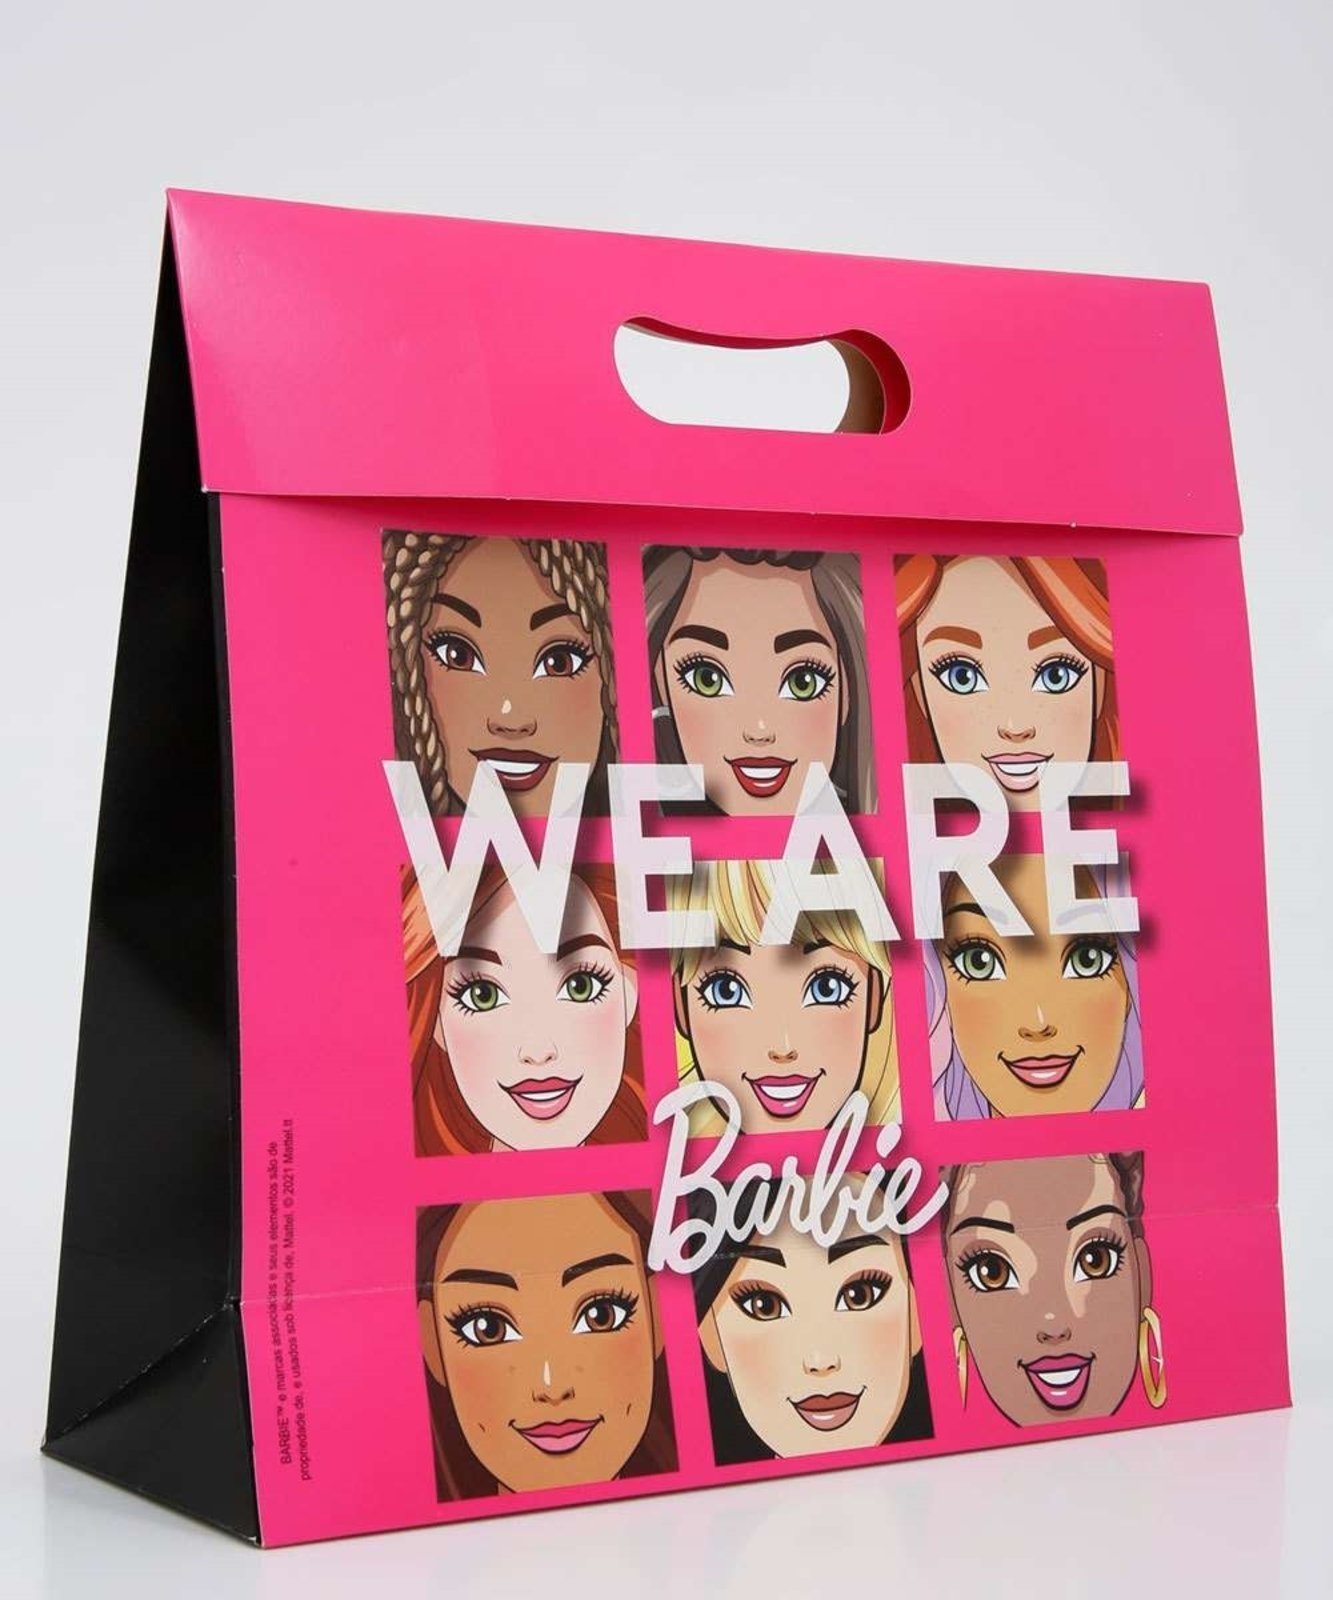 Embalagem Presente Sacola Barbie